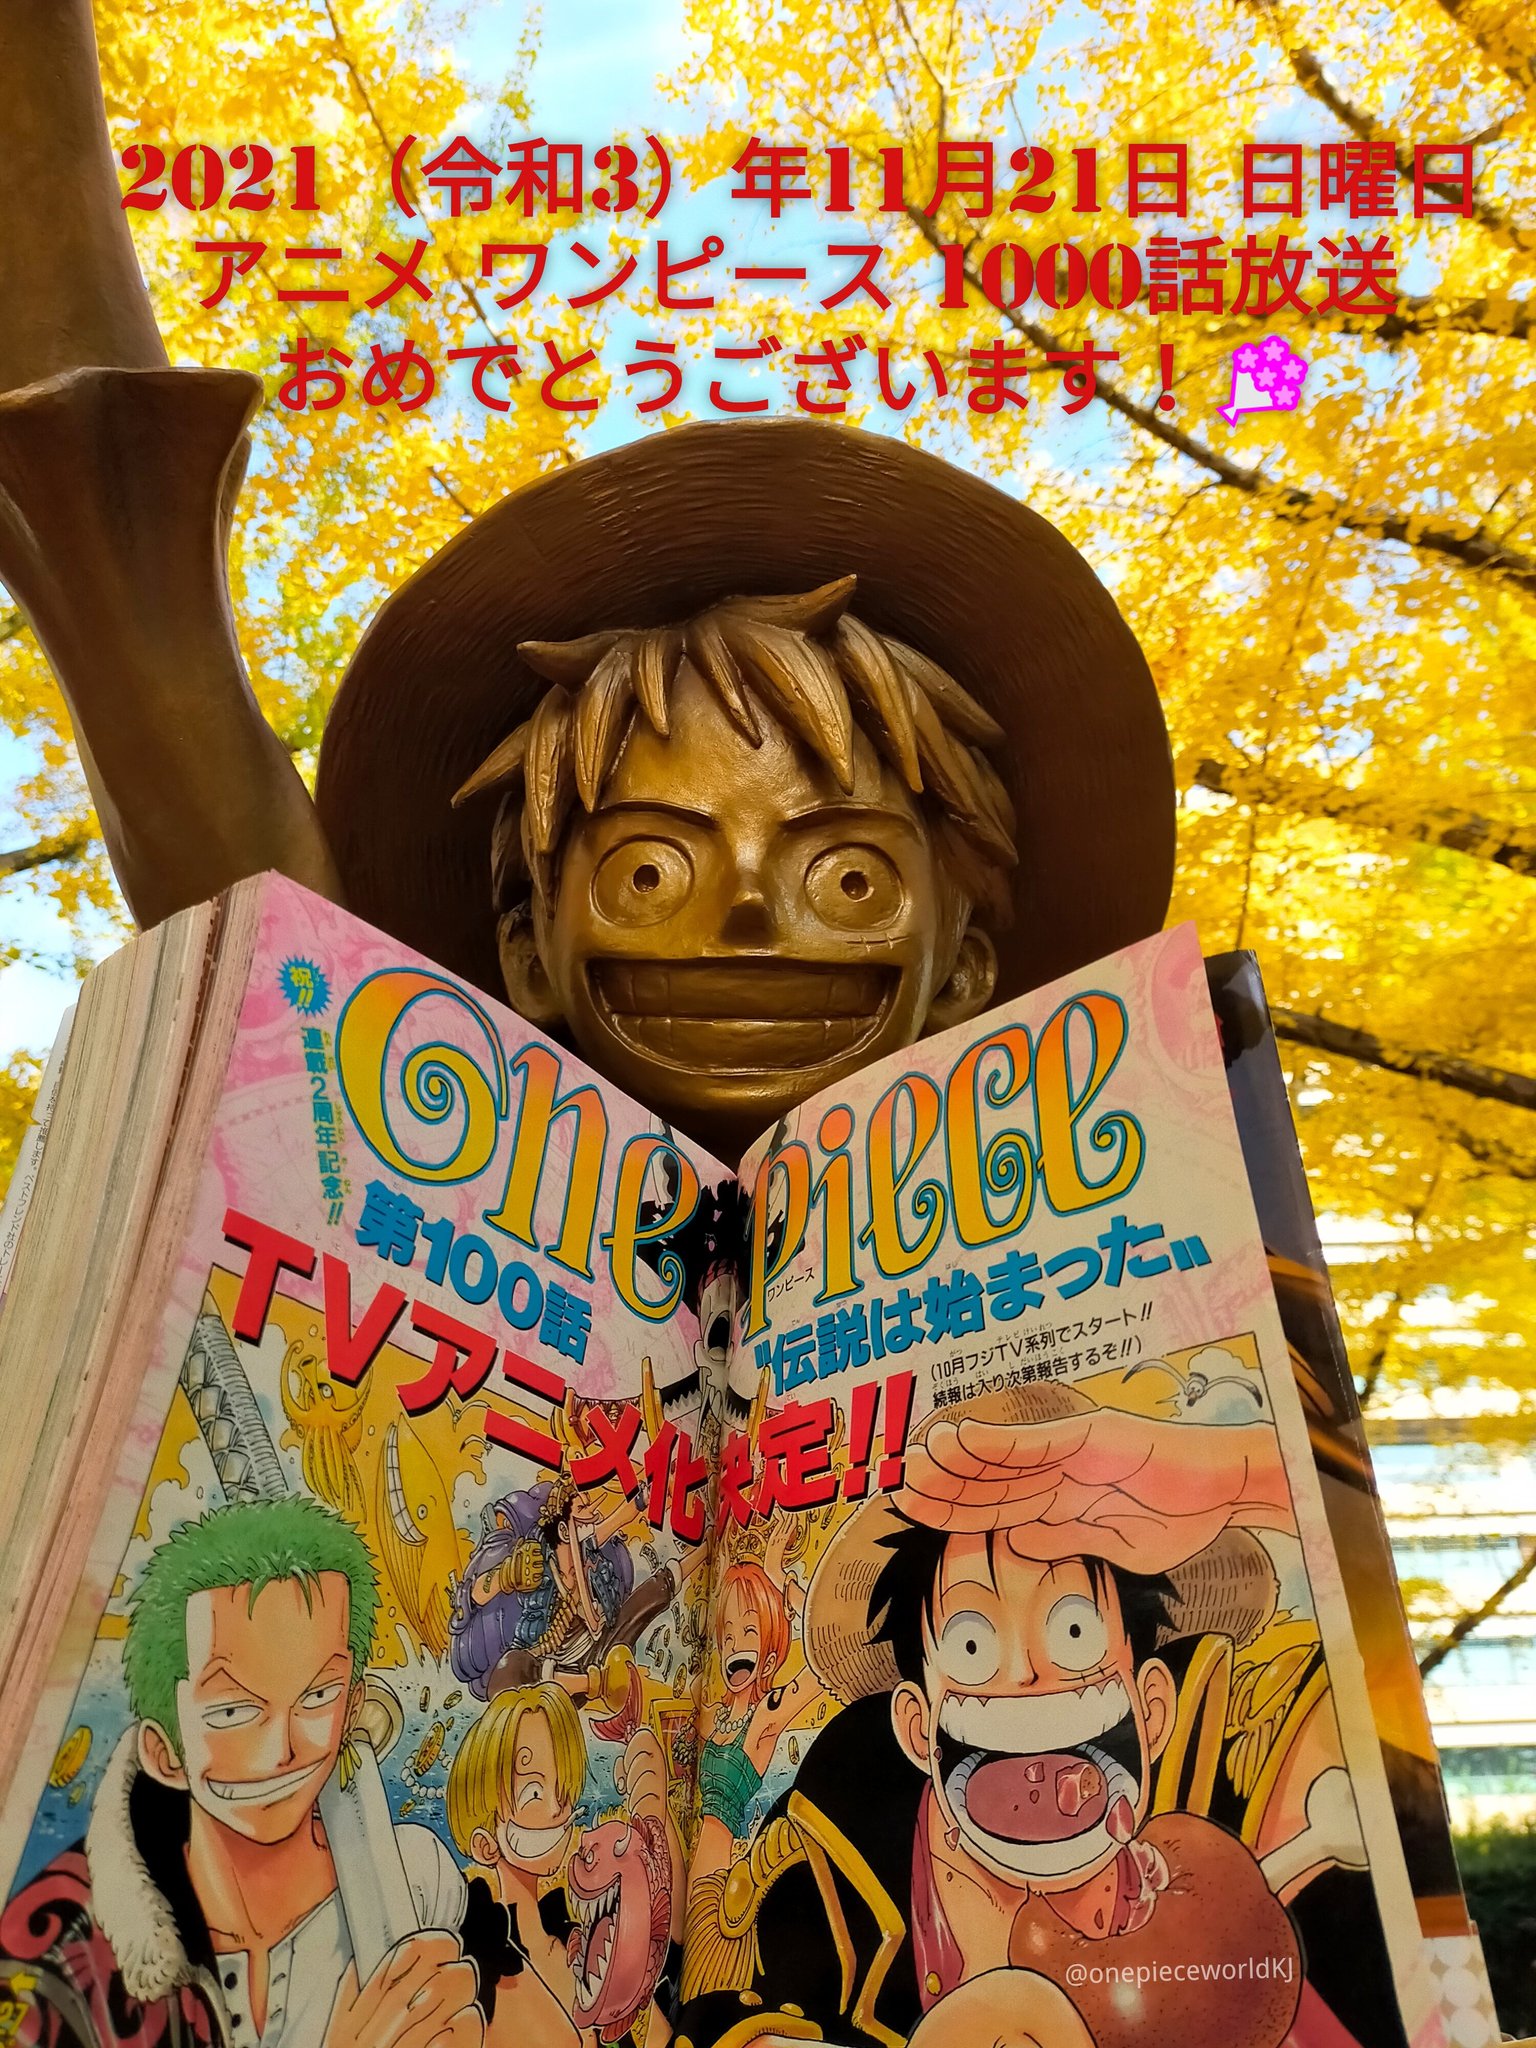 One Piece World Kumamoto Japan アニメワンピース1000話放送おめでとうございます 尾田先生 集英社様 東映アニメーション様の紡いできた22年の歴史に感謝 ありがとうございます ワンピース Onepiece 尾田栄一郎 ルフィ Luffy Onepiece1000logs